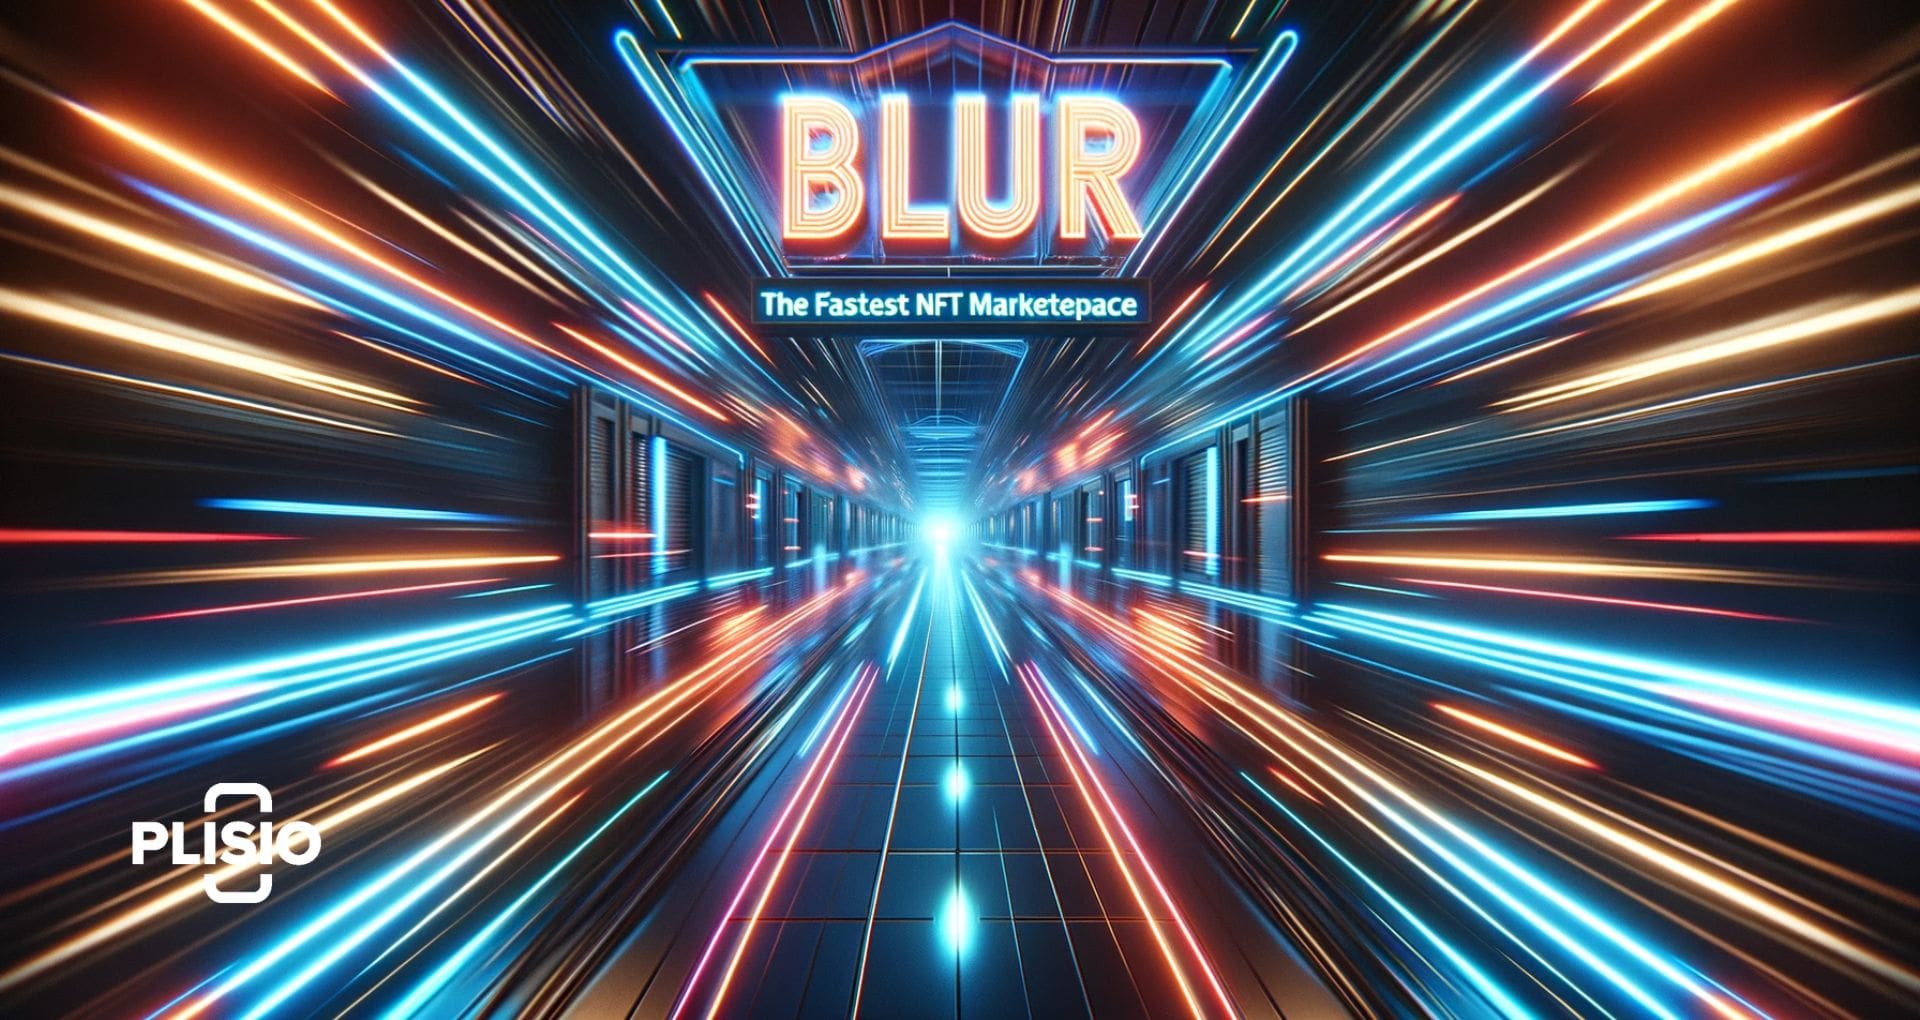 Blur NFT 마켓플레이스란 무엇인가요?